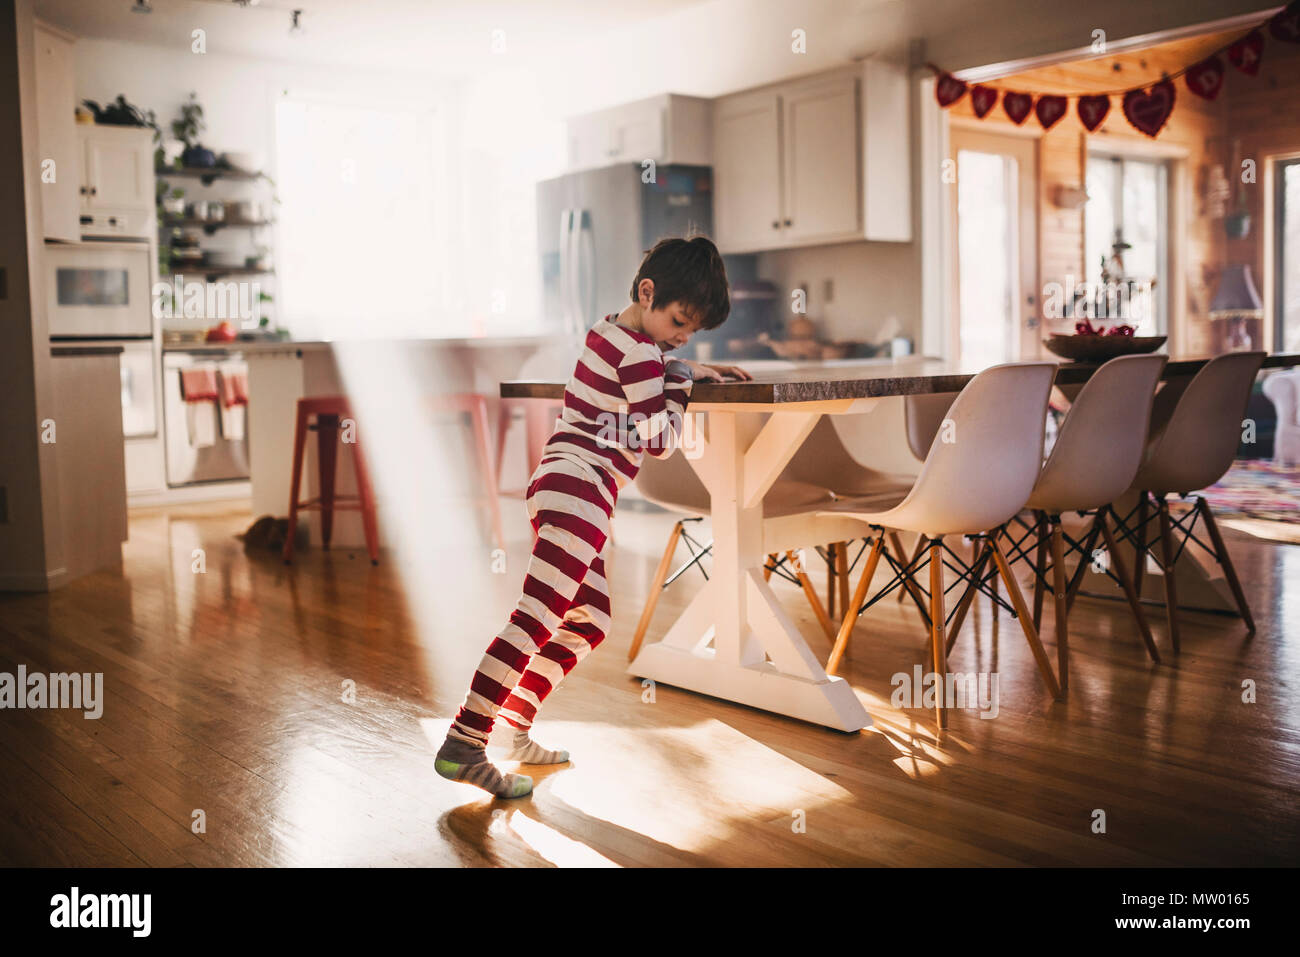 Boy dancing in cucina nel suo pigiama Foto Stock